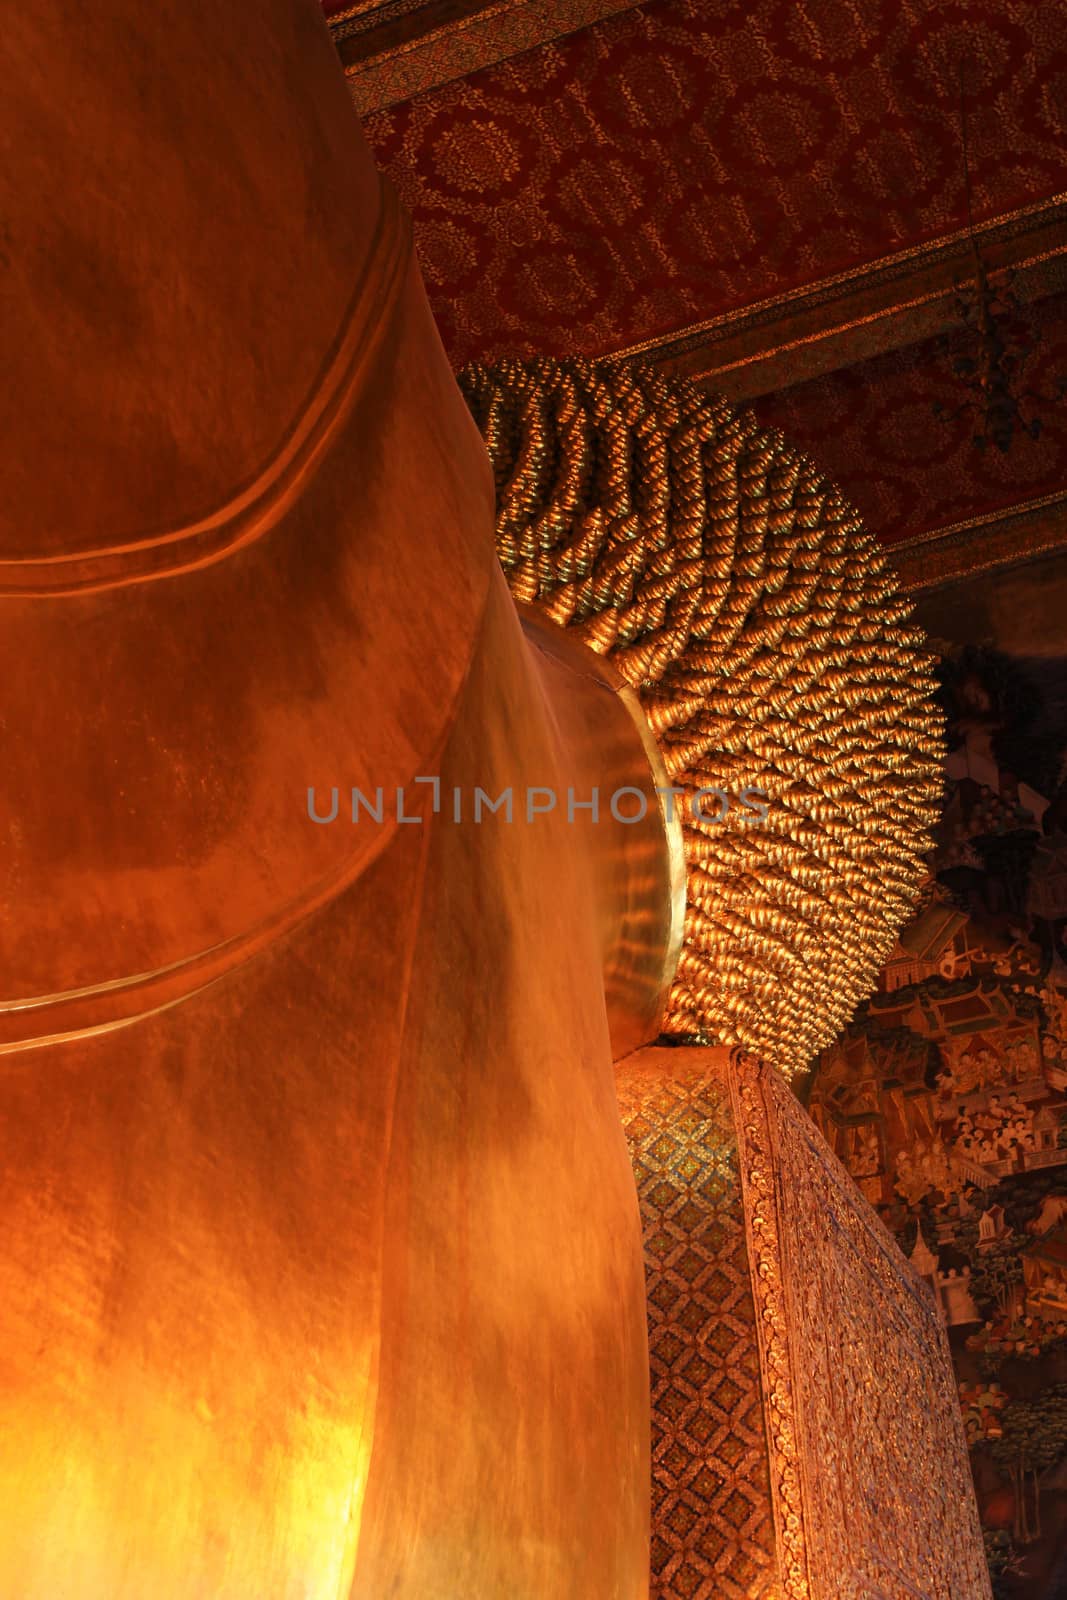 Reclining buddha image by narinbg